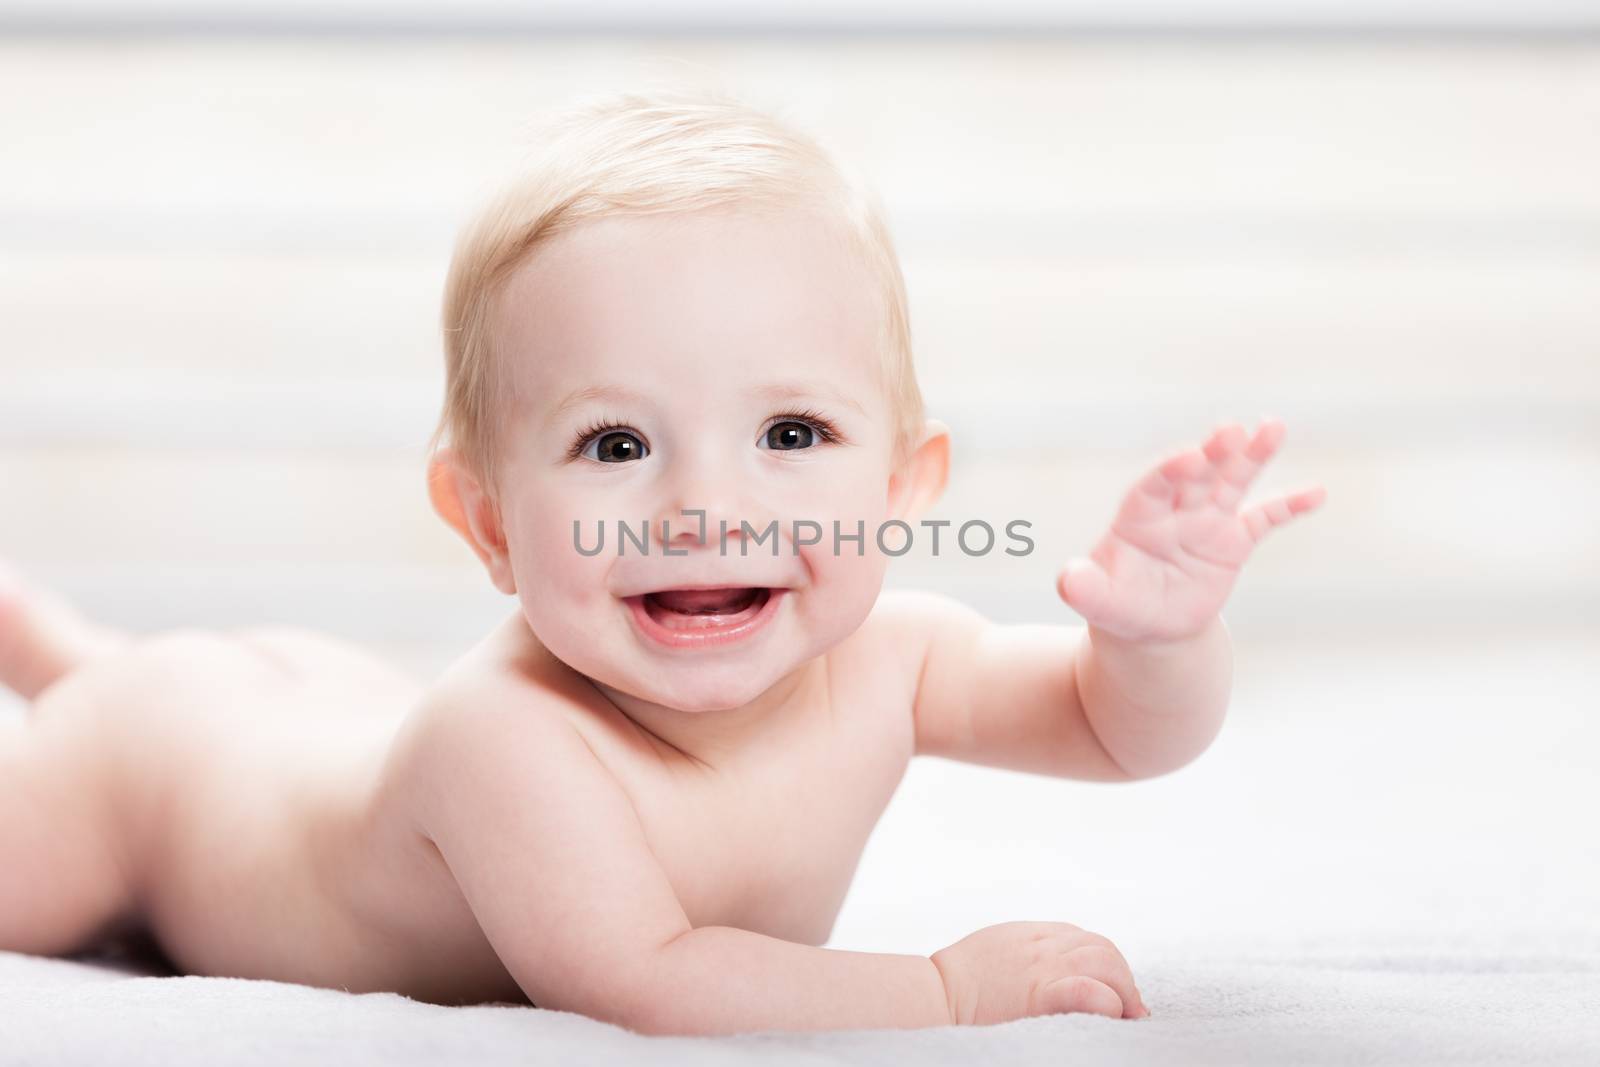 Little cute smiling newborn baby child boy hand gesturing hello or goodbye sign